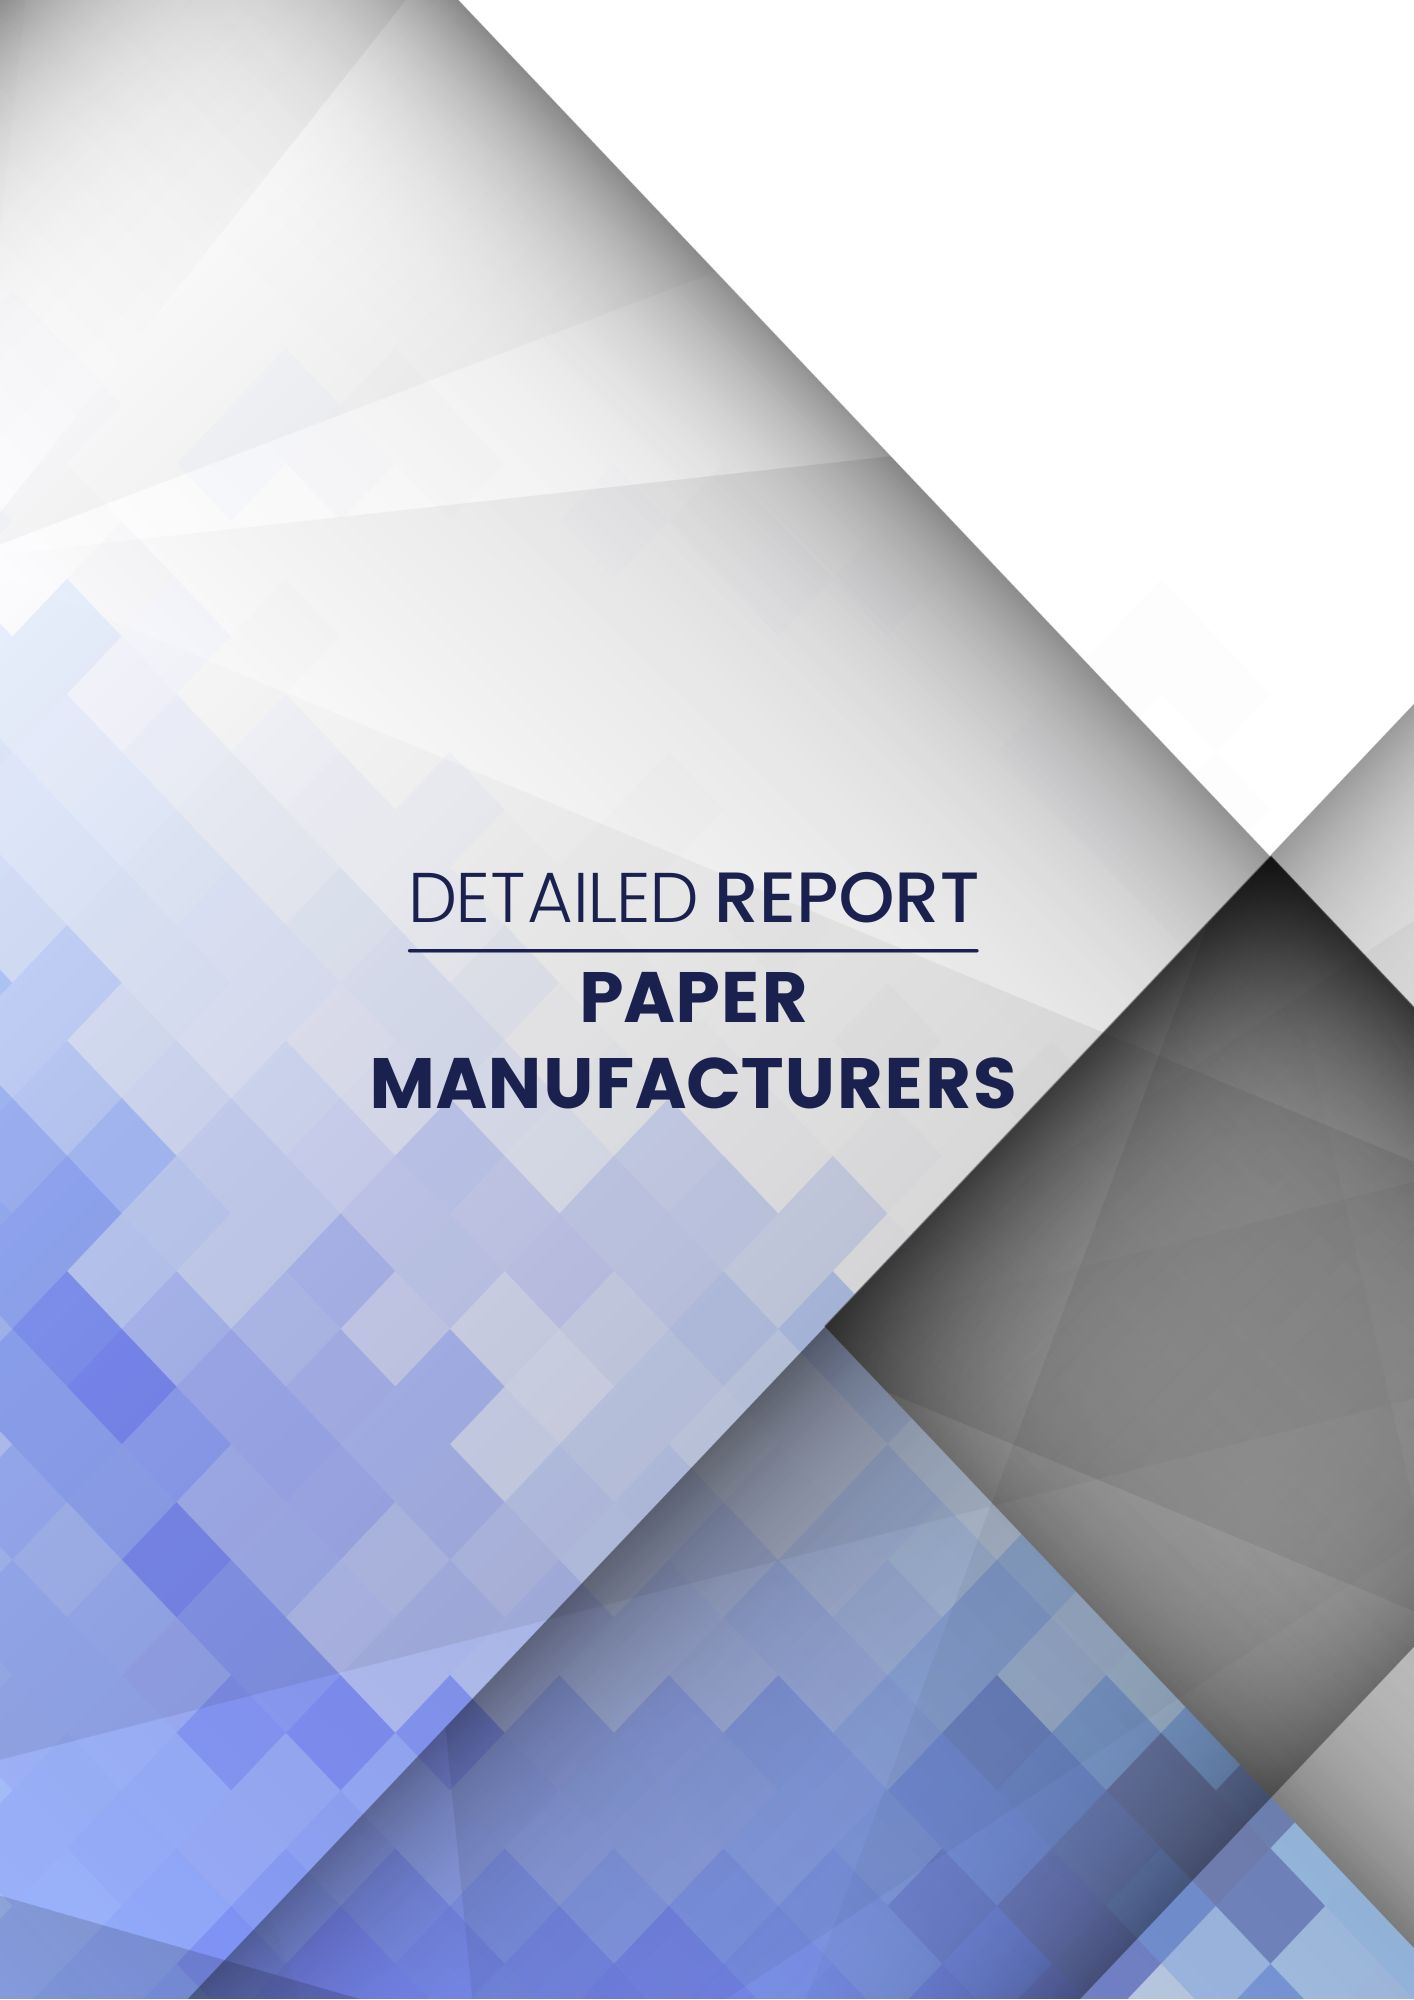 Paper Manufacturers (2)